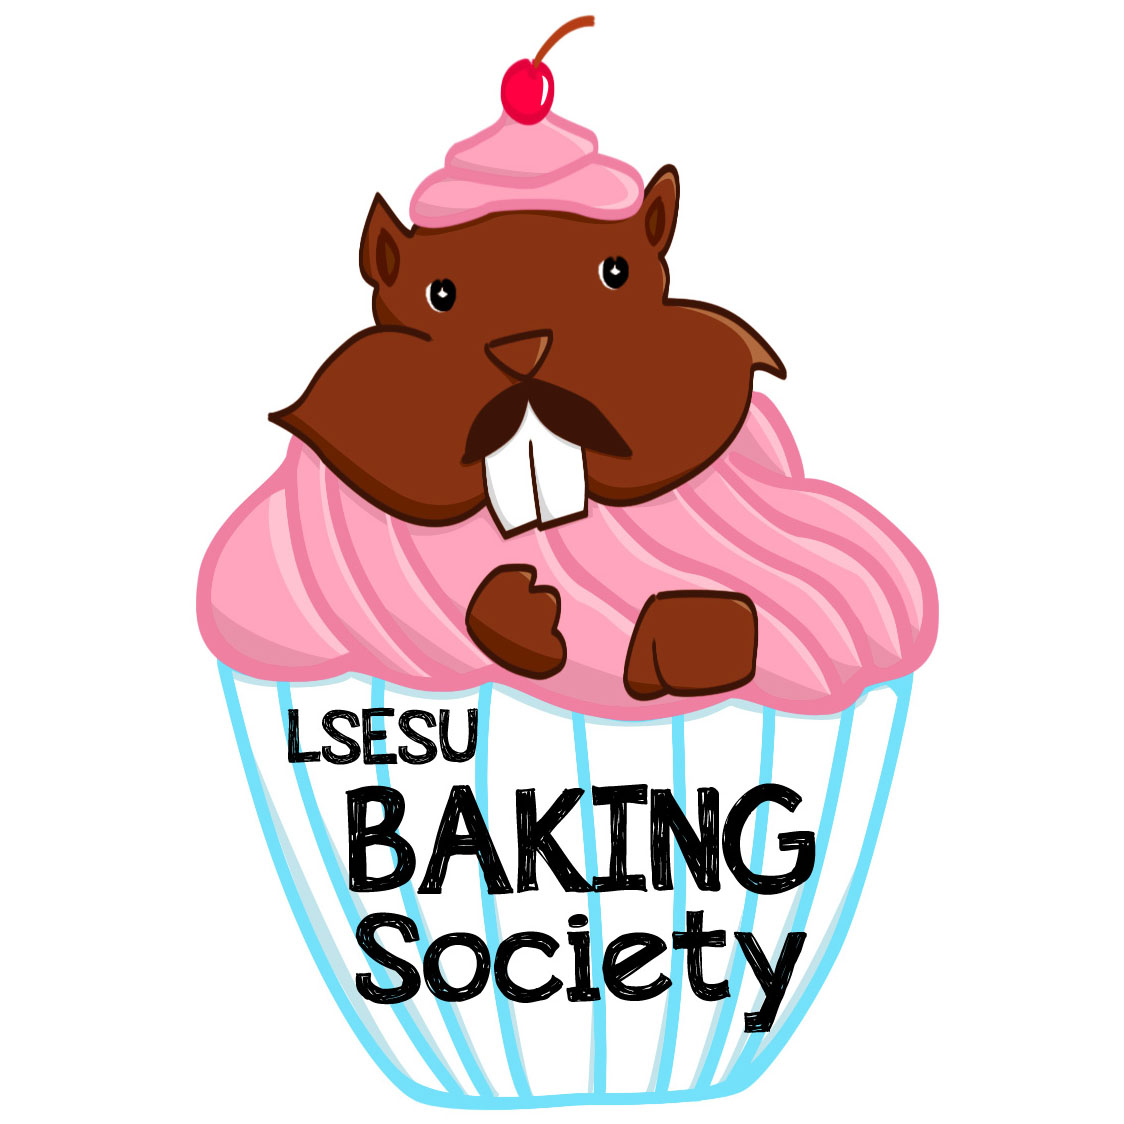 LSESU Baking Society on Facebook